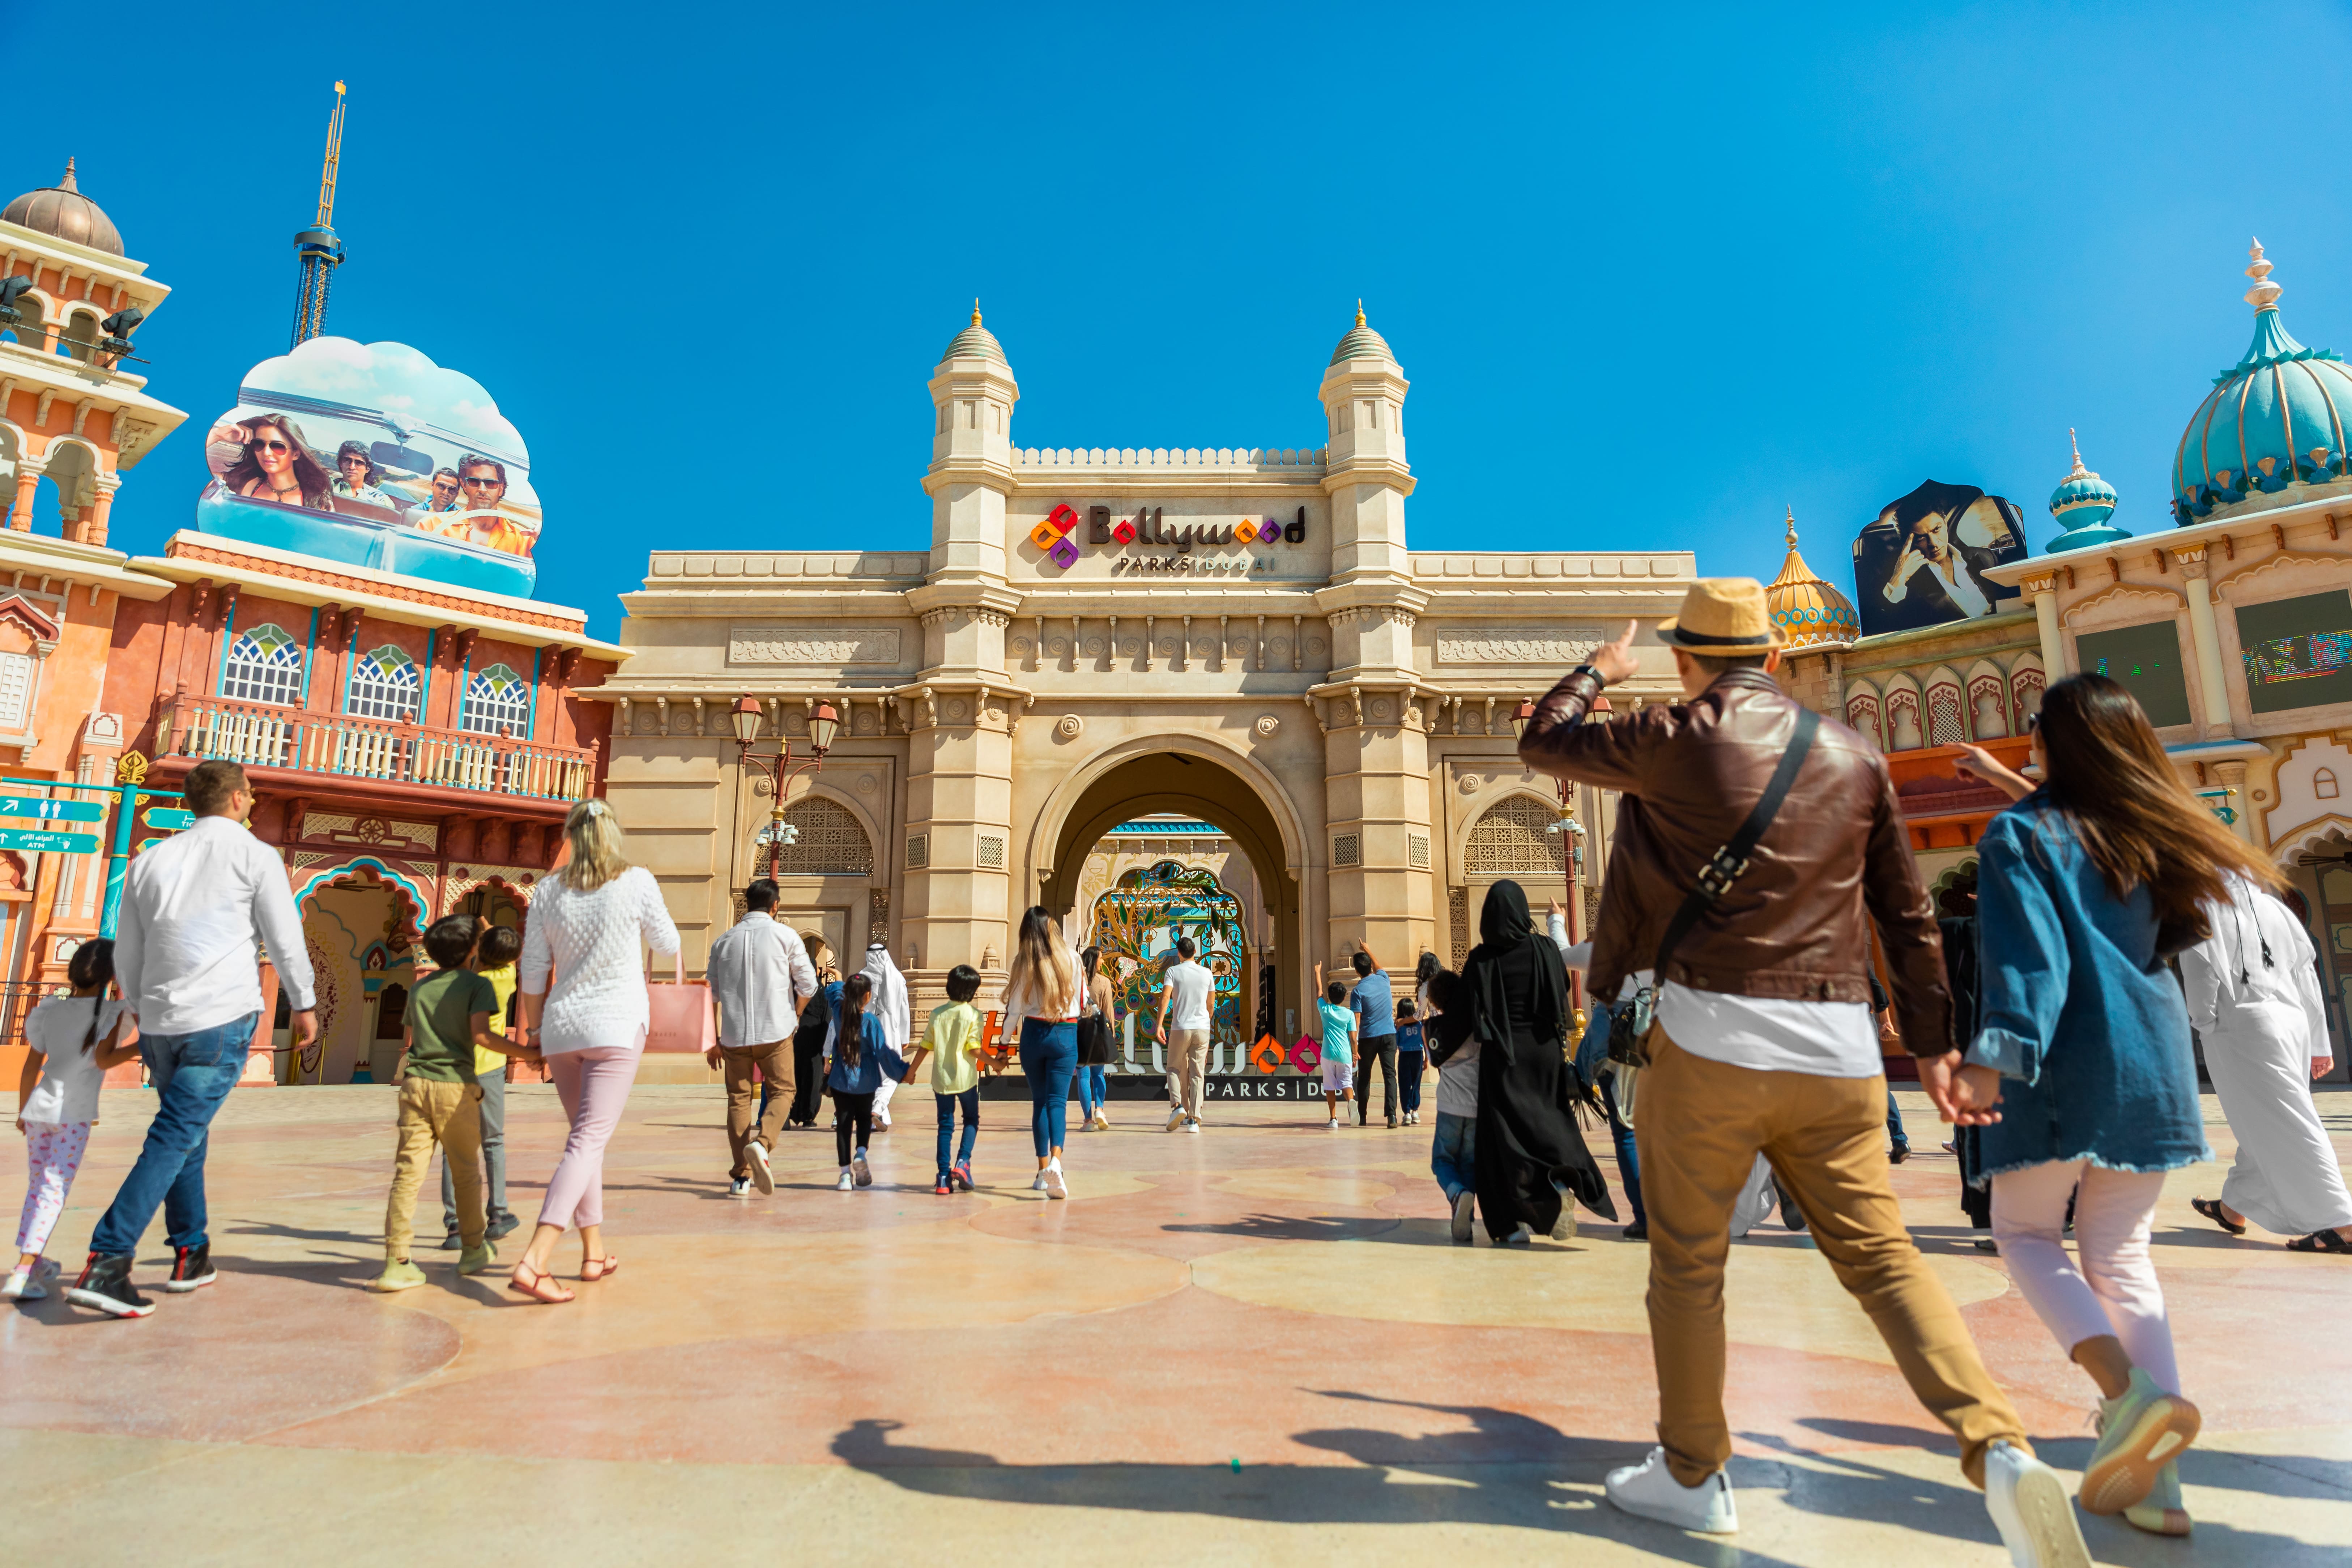 entrance at Dubai theme park - global village